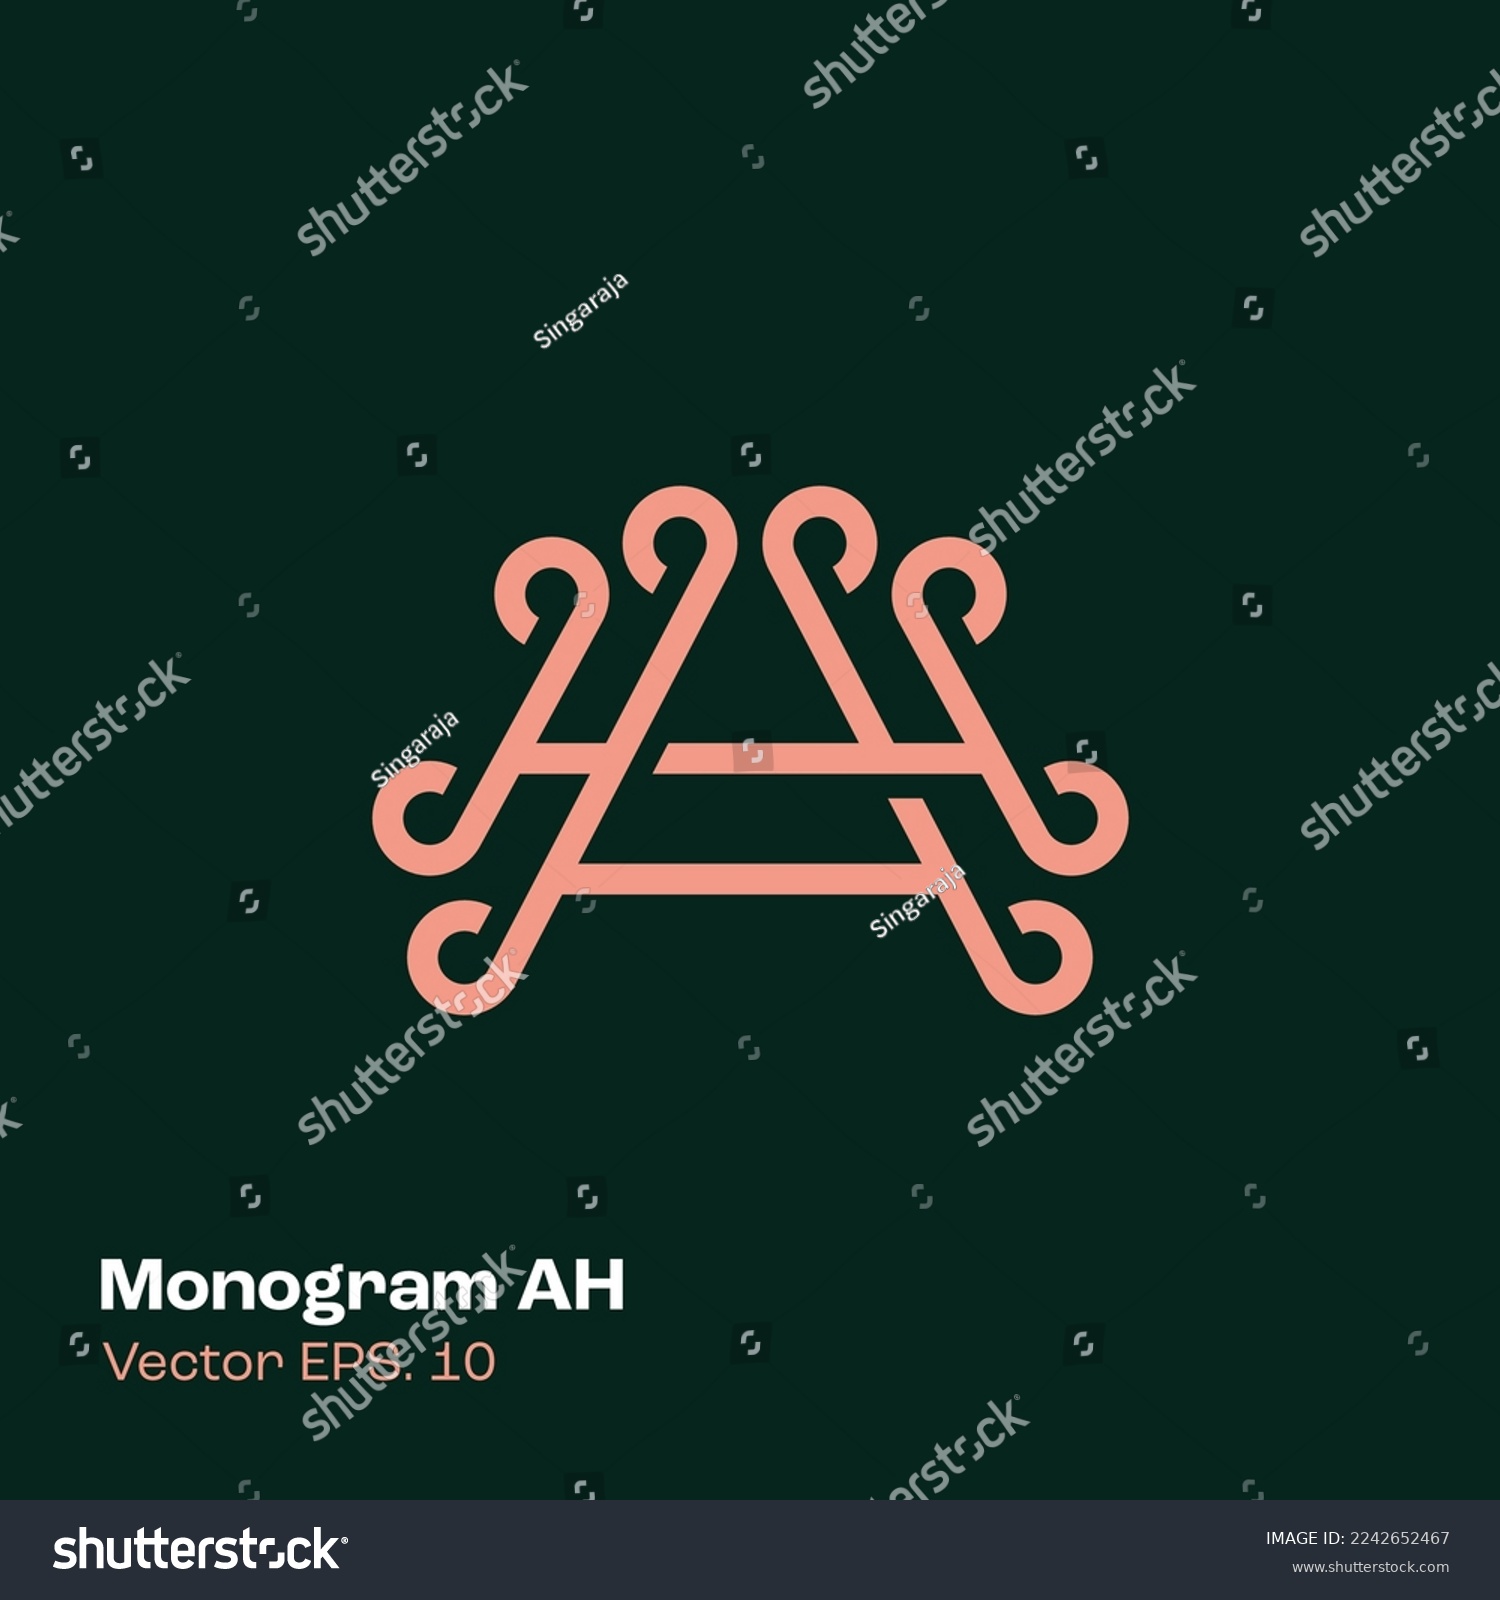 SVG of AH monogram logo, AH Monogram Vector logo svg